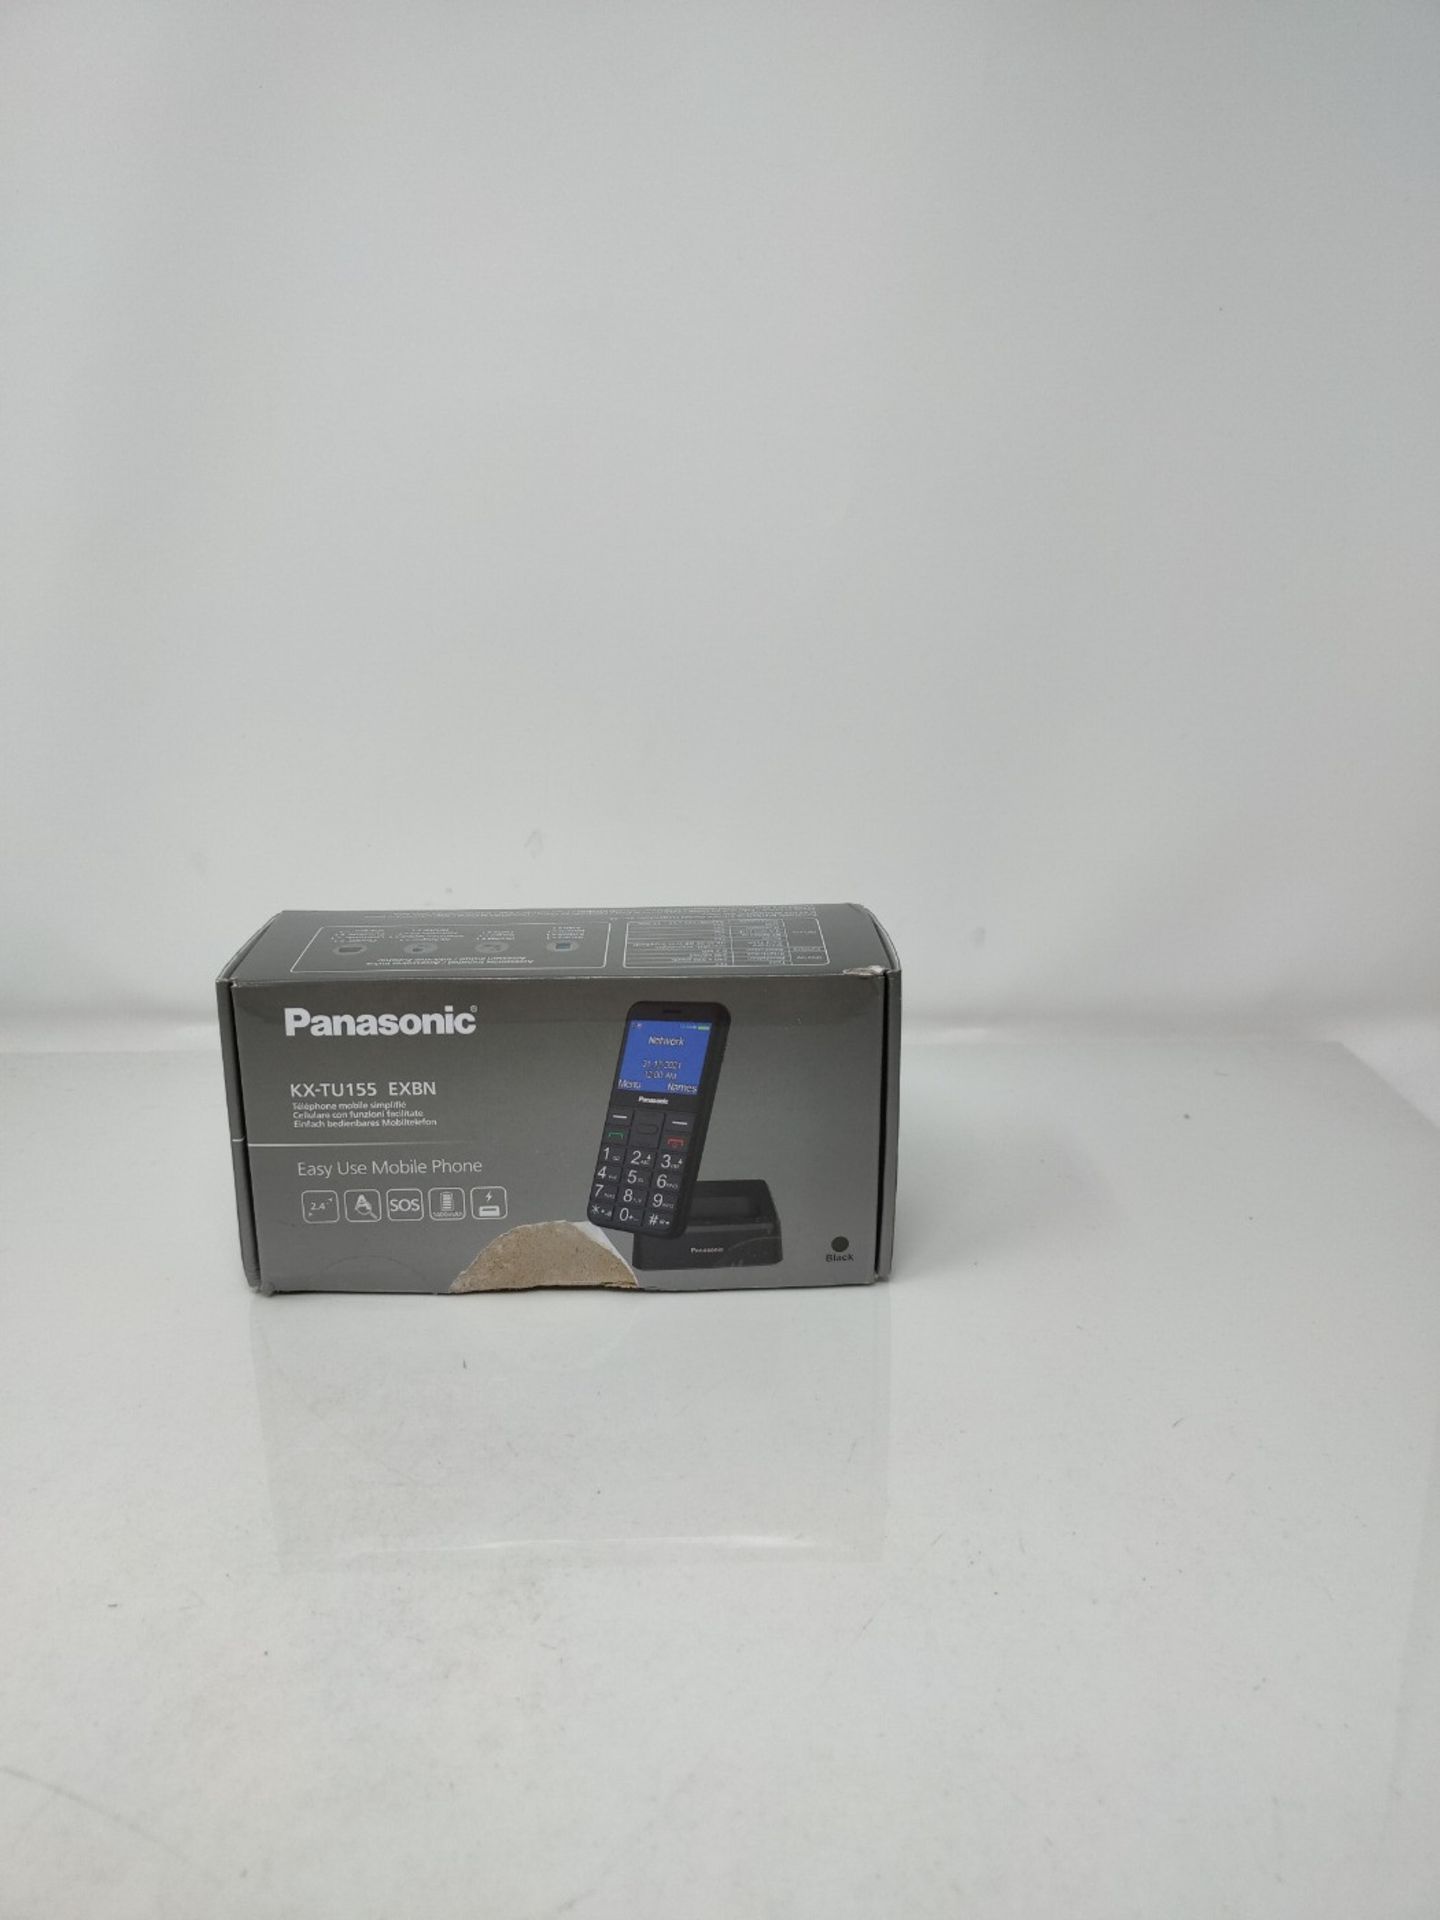 Panasonic KX-TU155 EXBN Easy Use Mobile Phone - Image 2 of 3